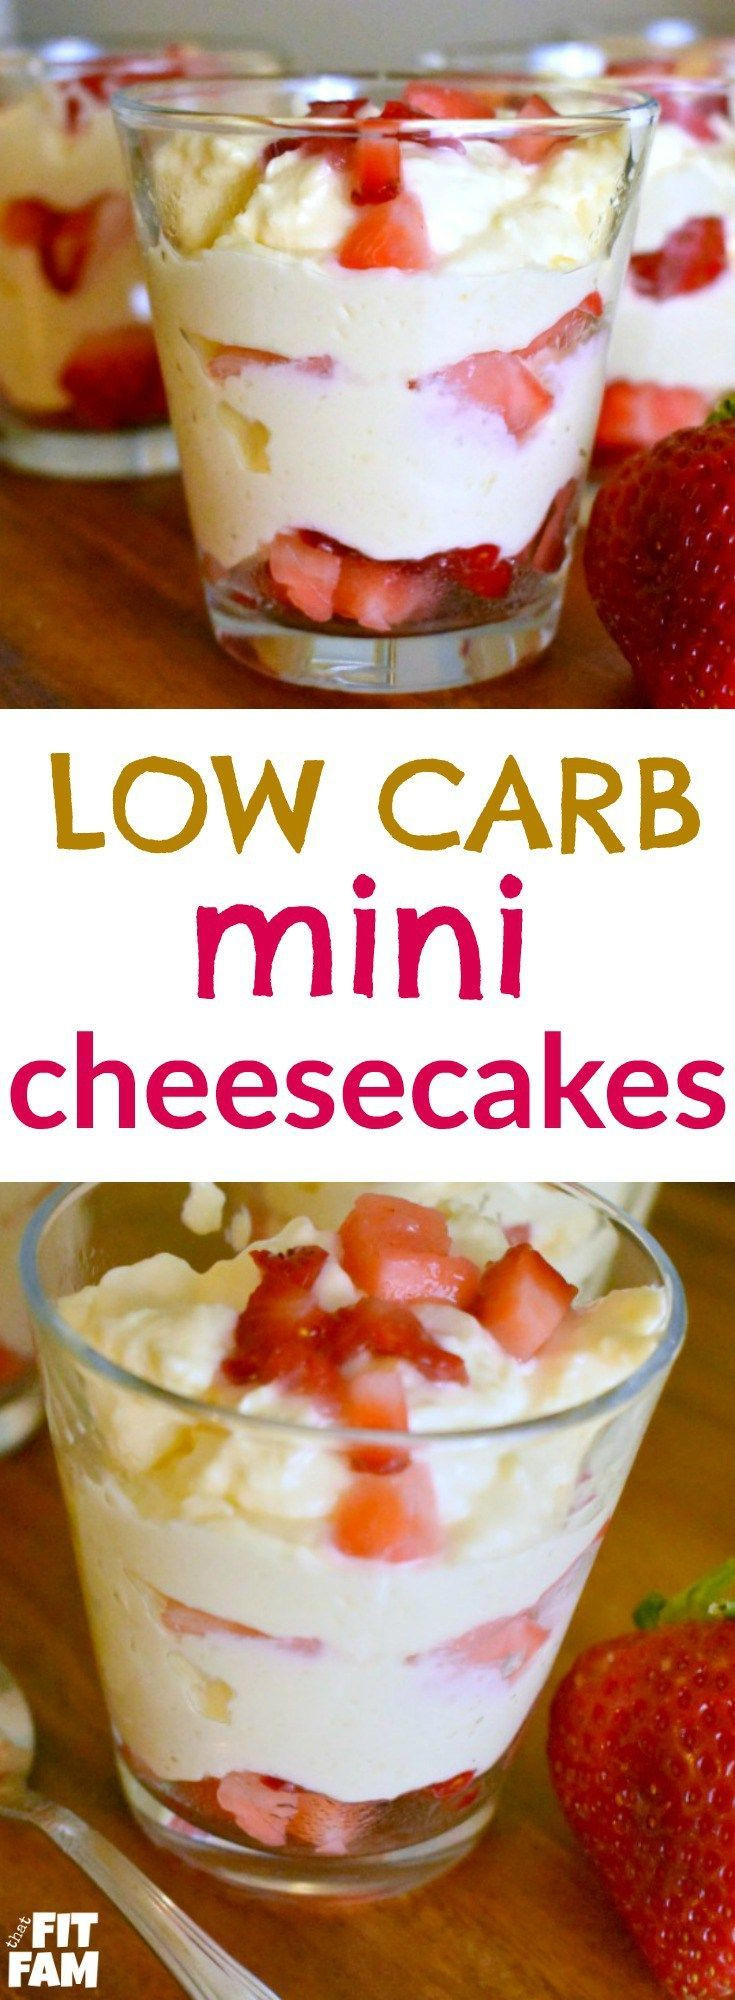 Low Sugar Low Carb Desserts
 Best 25 Low Carb Desserts ideas on Pinterest